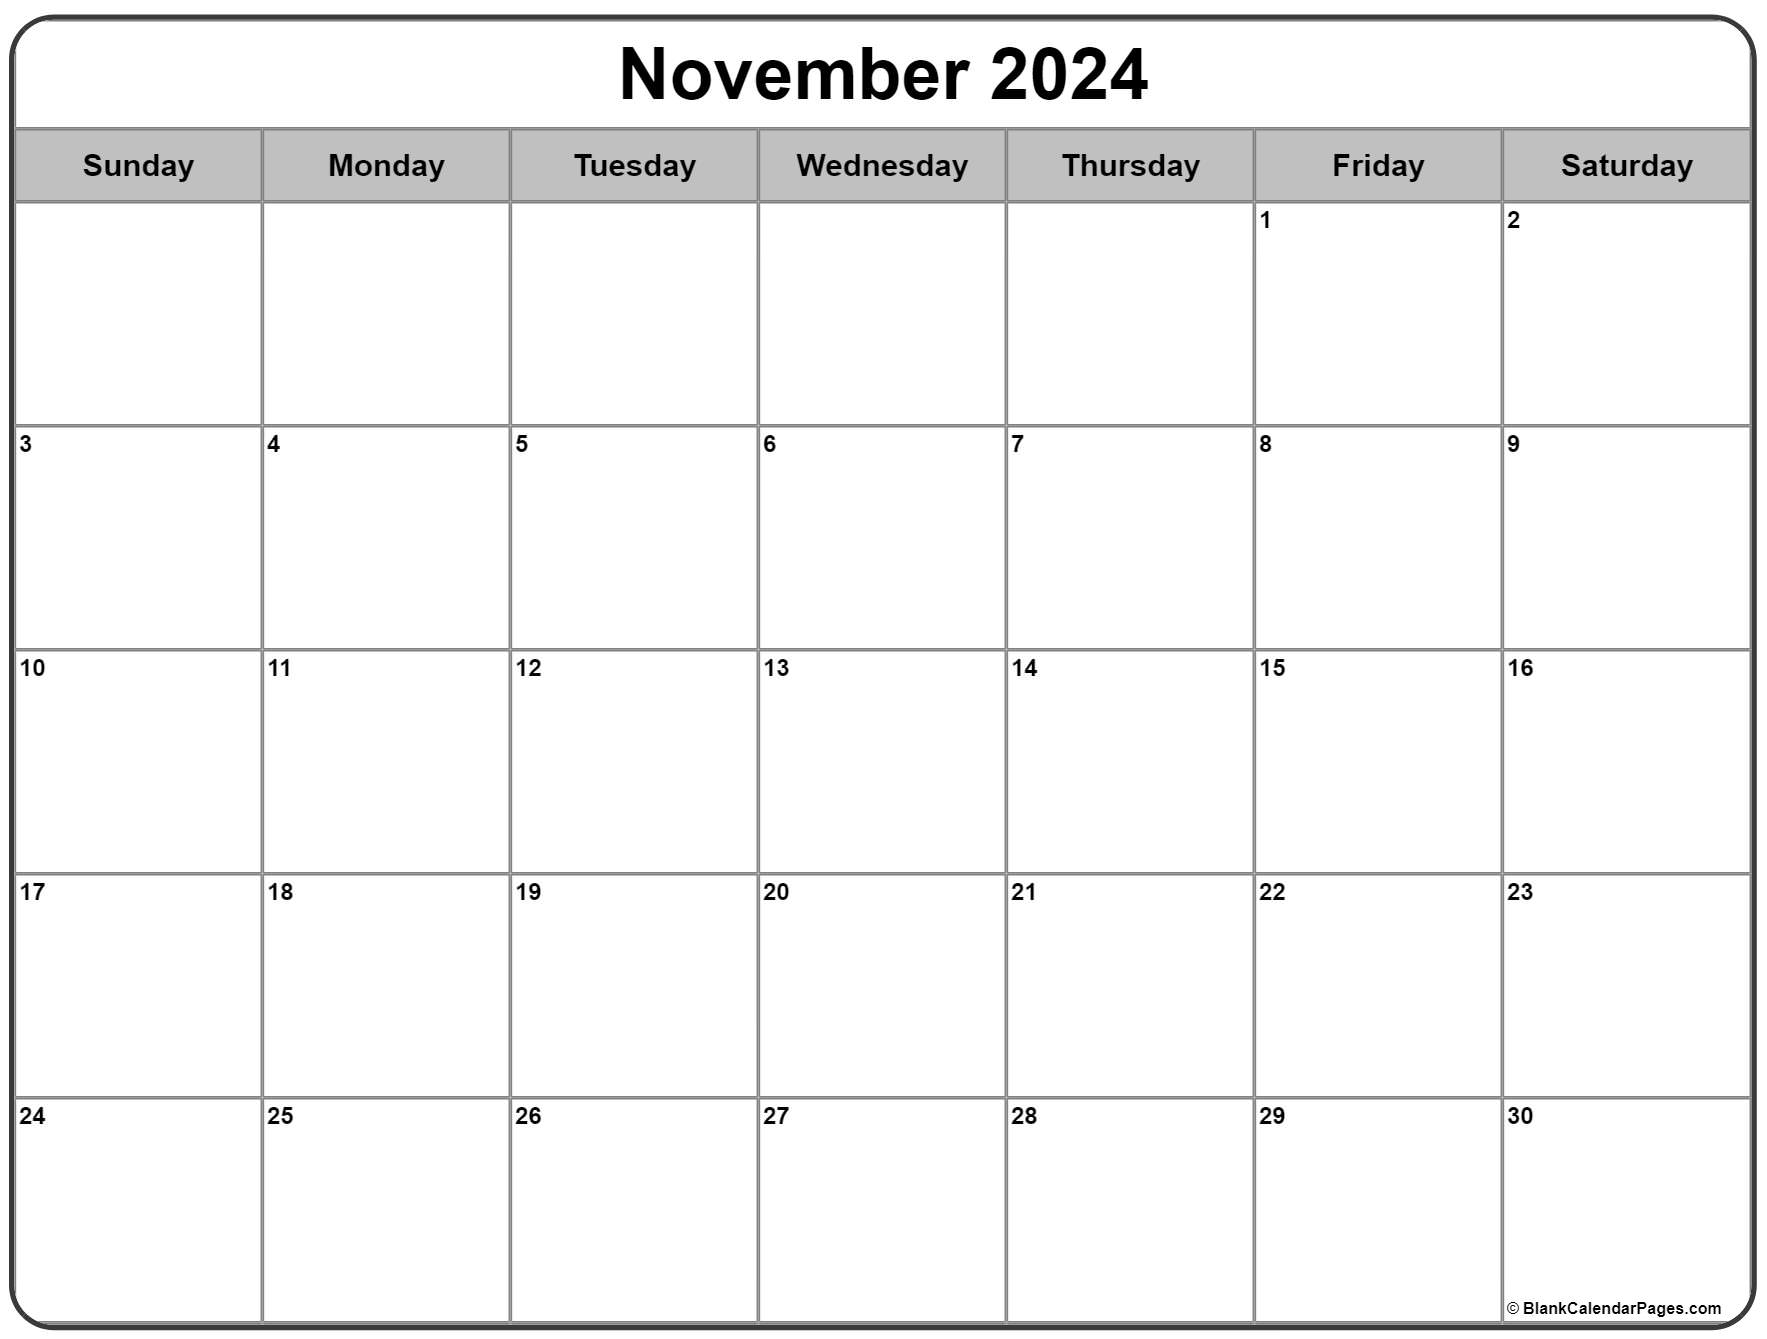 November 2024 calendar free printable calendar